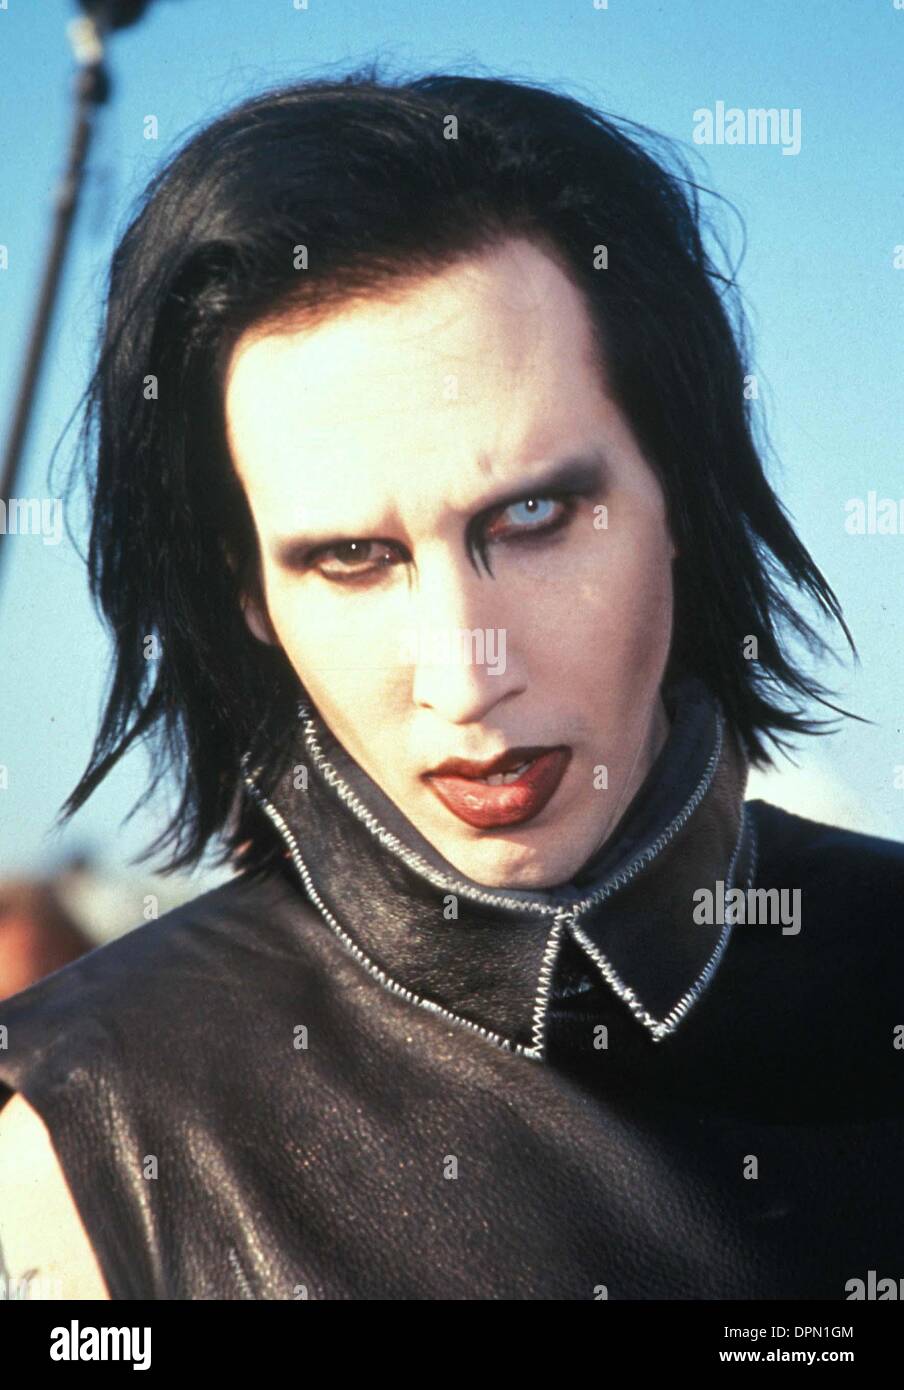 Febbraio 22, 2006 - K15809LR.MTV Movie Awards BARKER HANGER, CA. LISA ROSE - Marilyn Manson.06-05-1999(Immagine di credito: © Globo foto/ZUMAPRESS.com) Foto Stock